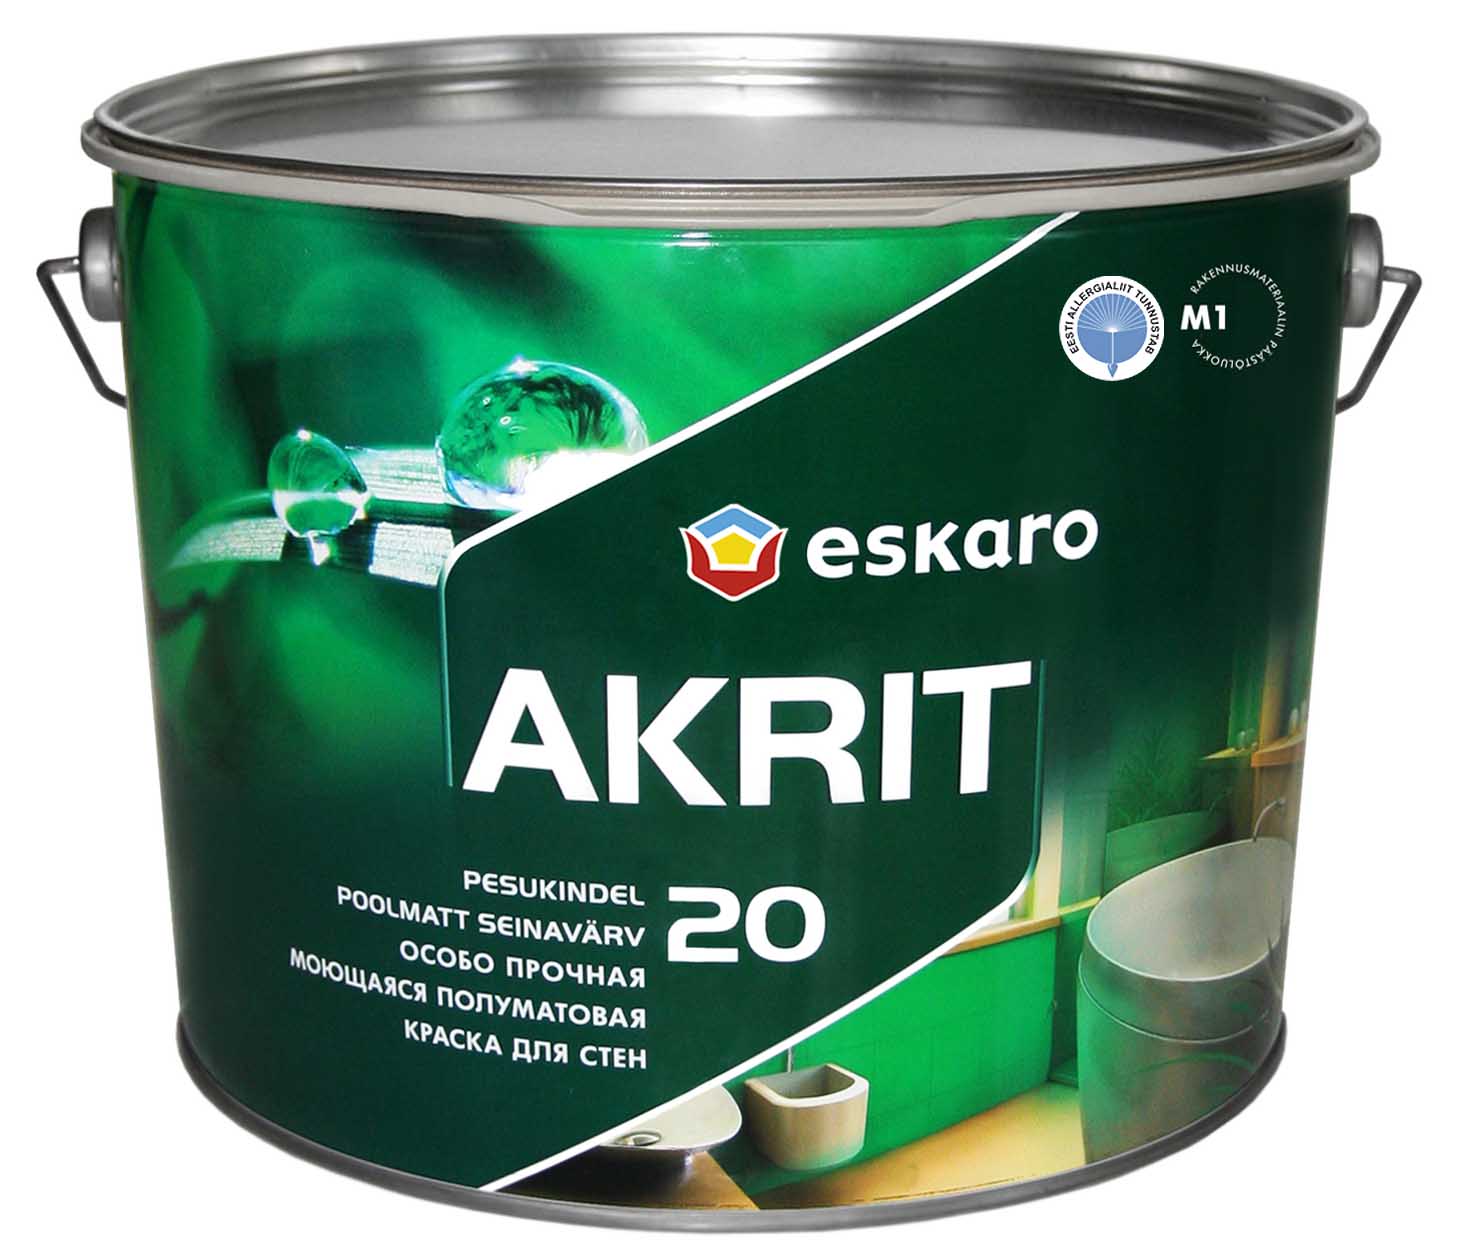 Особо прочная моющаяся полуматовая краска для стен Eskaro Akrit 20 (База А - белая) 9.5 л								